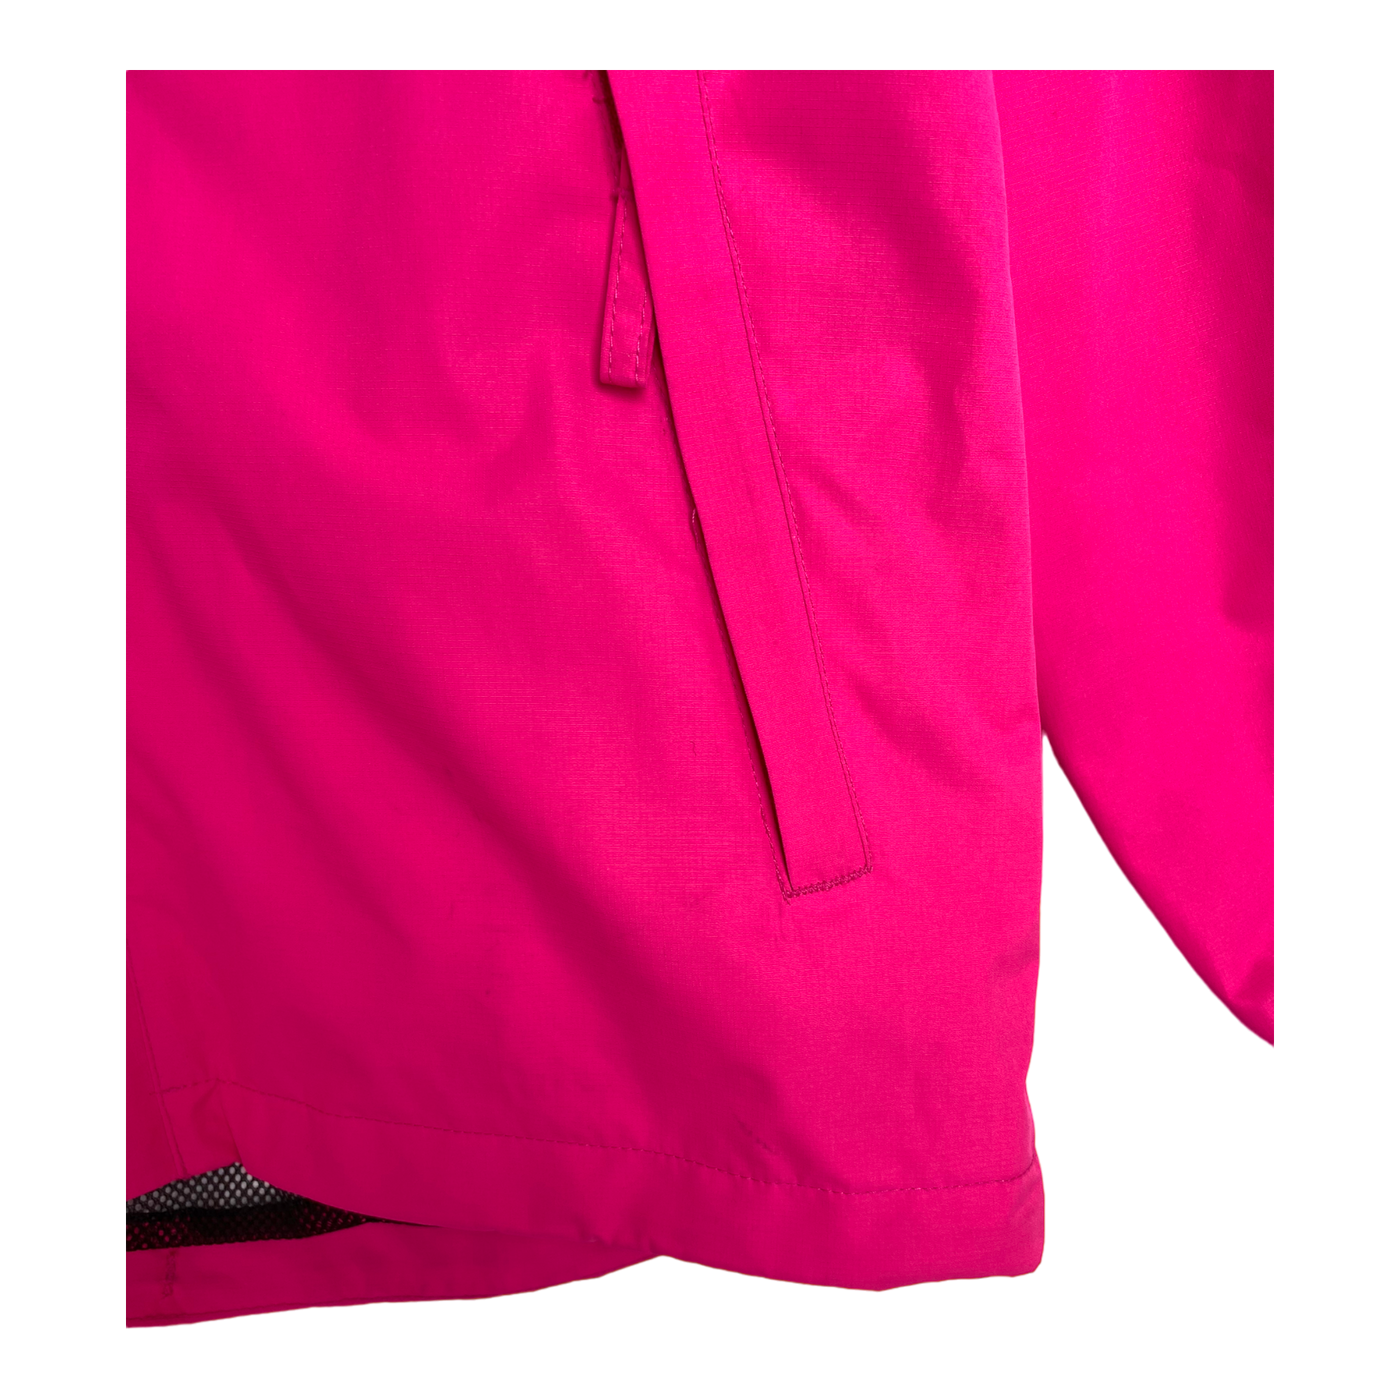 Halti kids midseason shell jacket, deep pink | 160cm